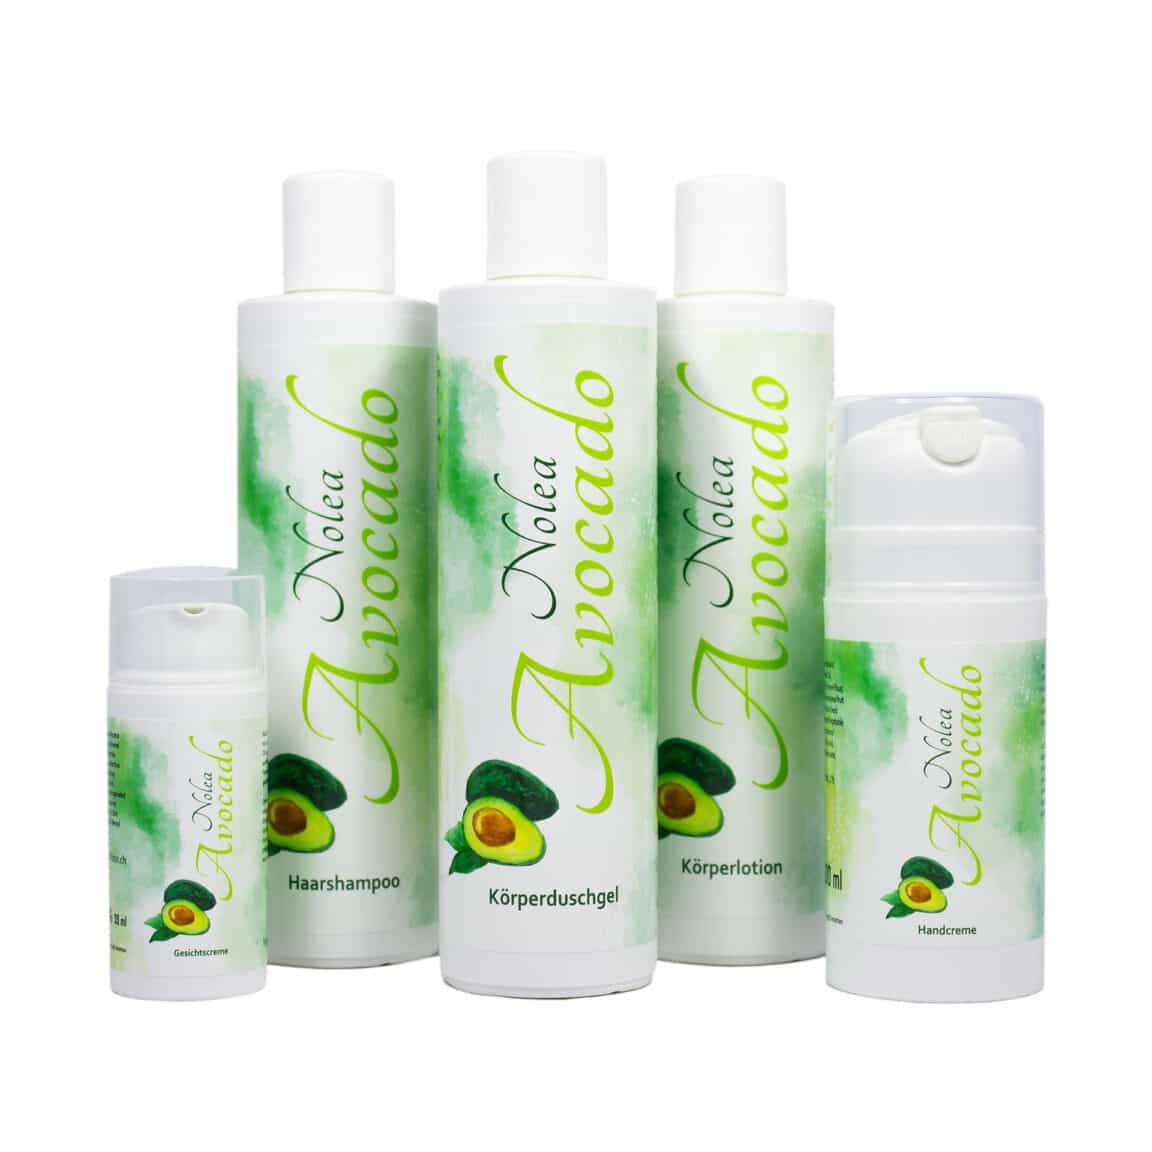 NOLEA Avocado Produkt-Linie, Gesichtscreme, Handcreme, Haarshampoo, Körperduschgel und Körperlotion. Naturkosmetik by Blidor AG.